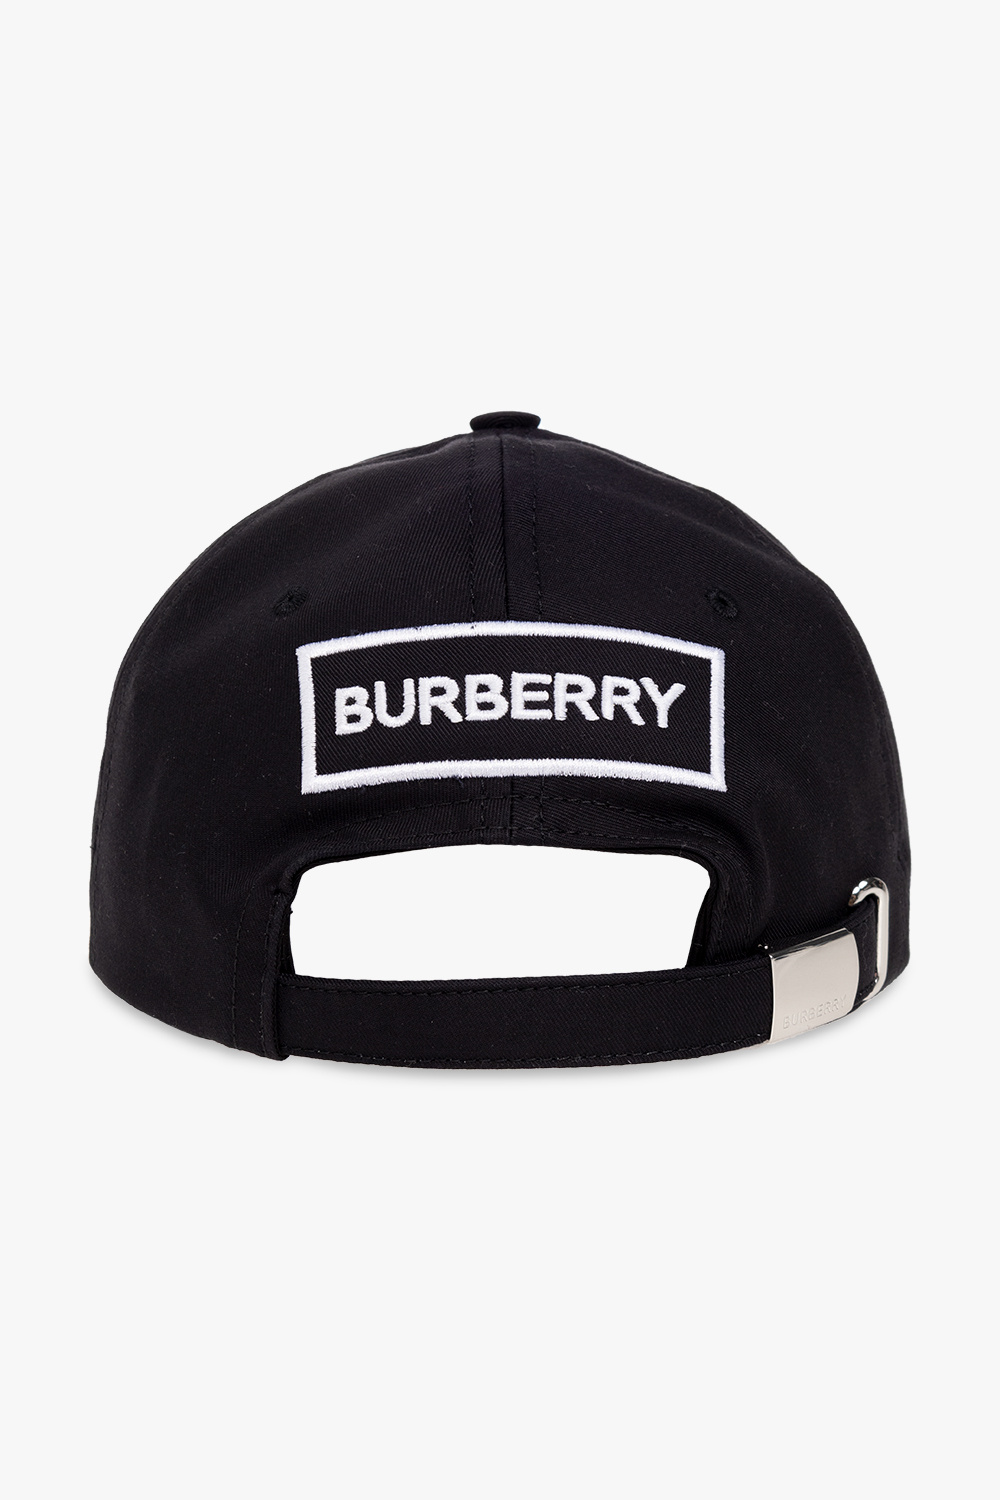 burberry blue Baseball cap